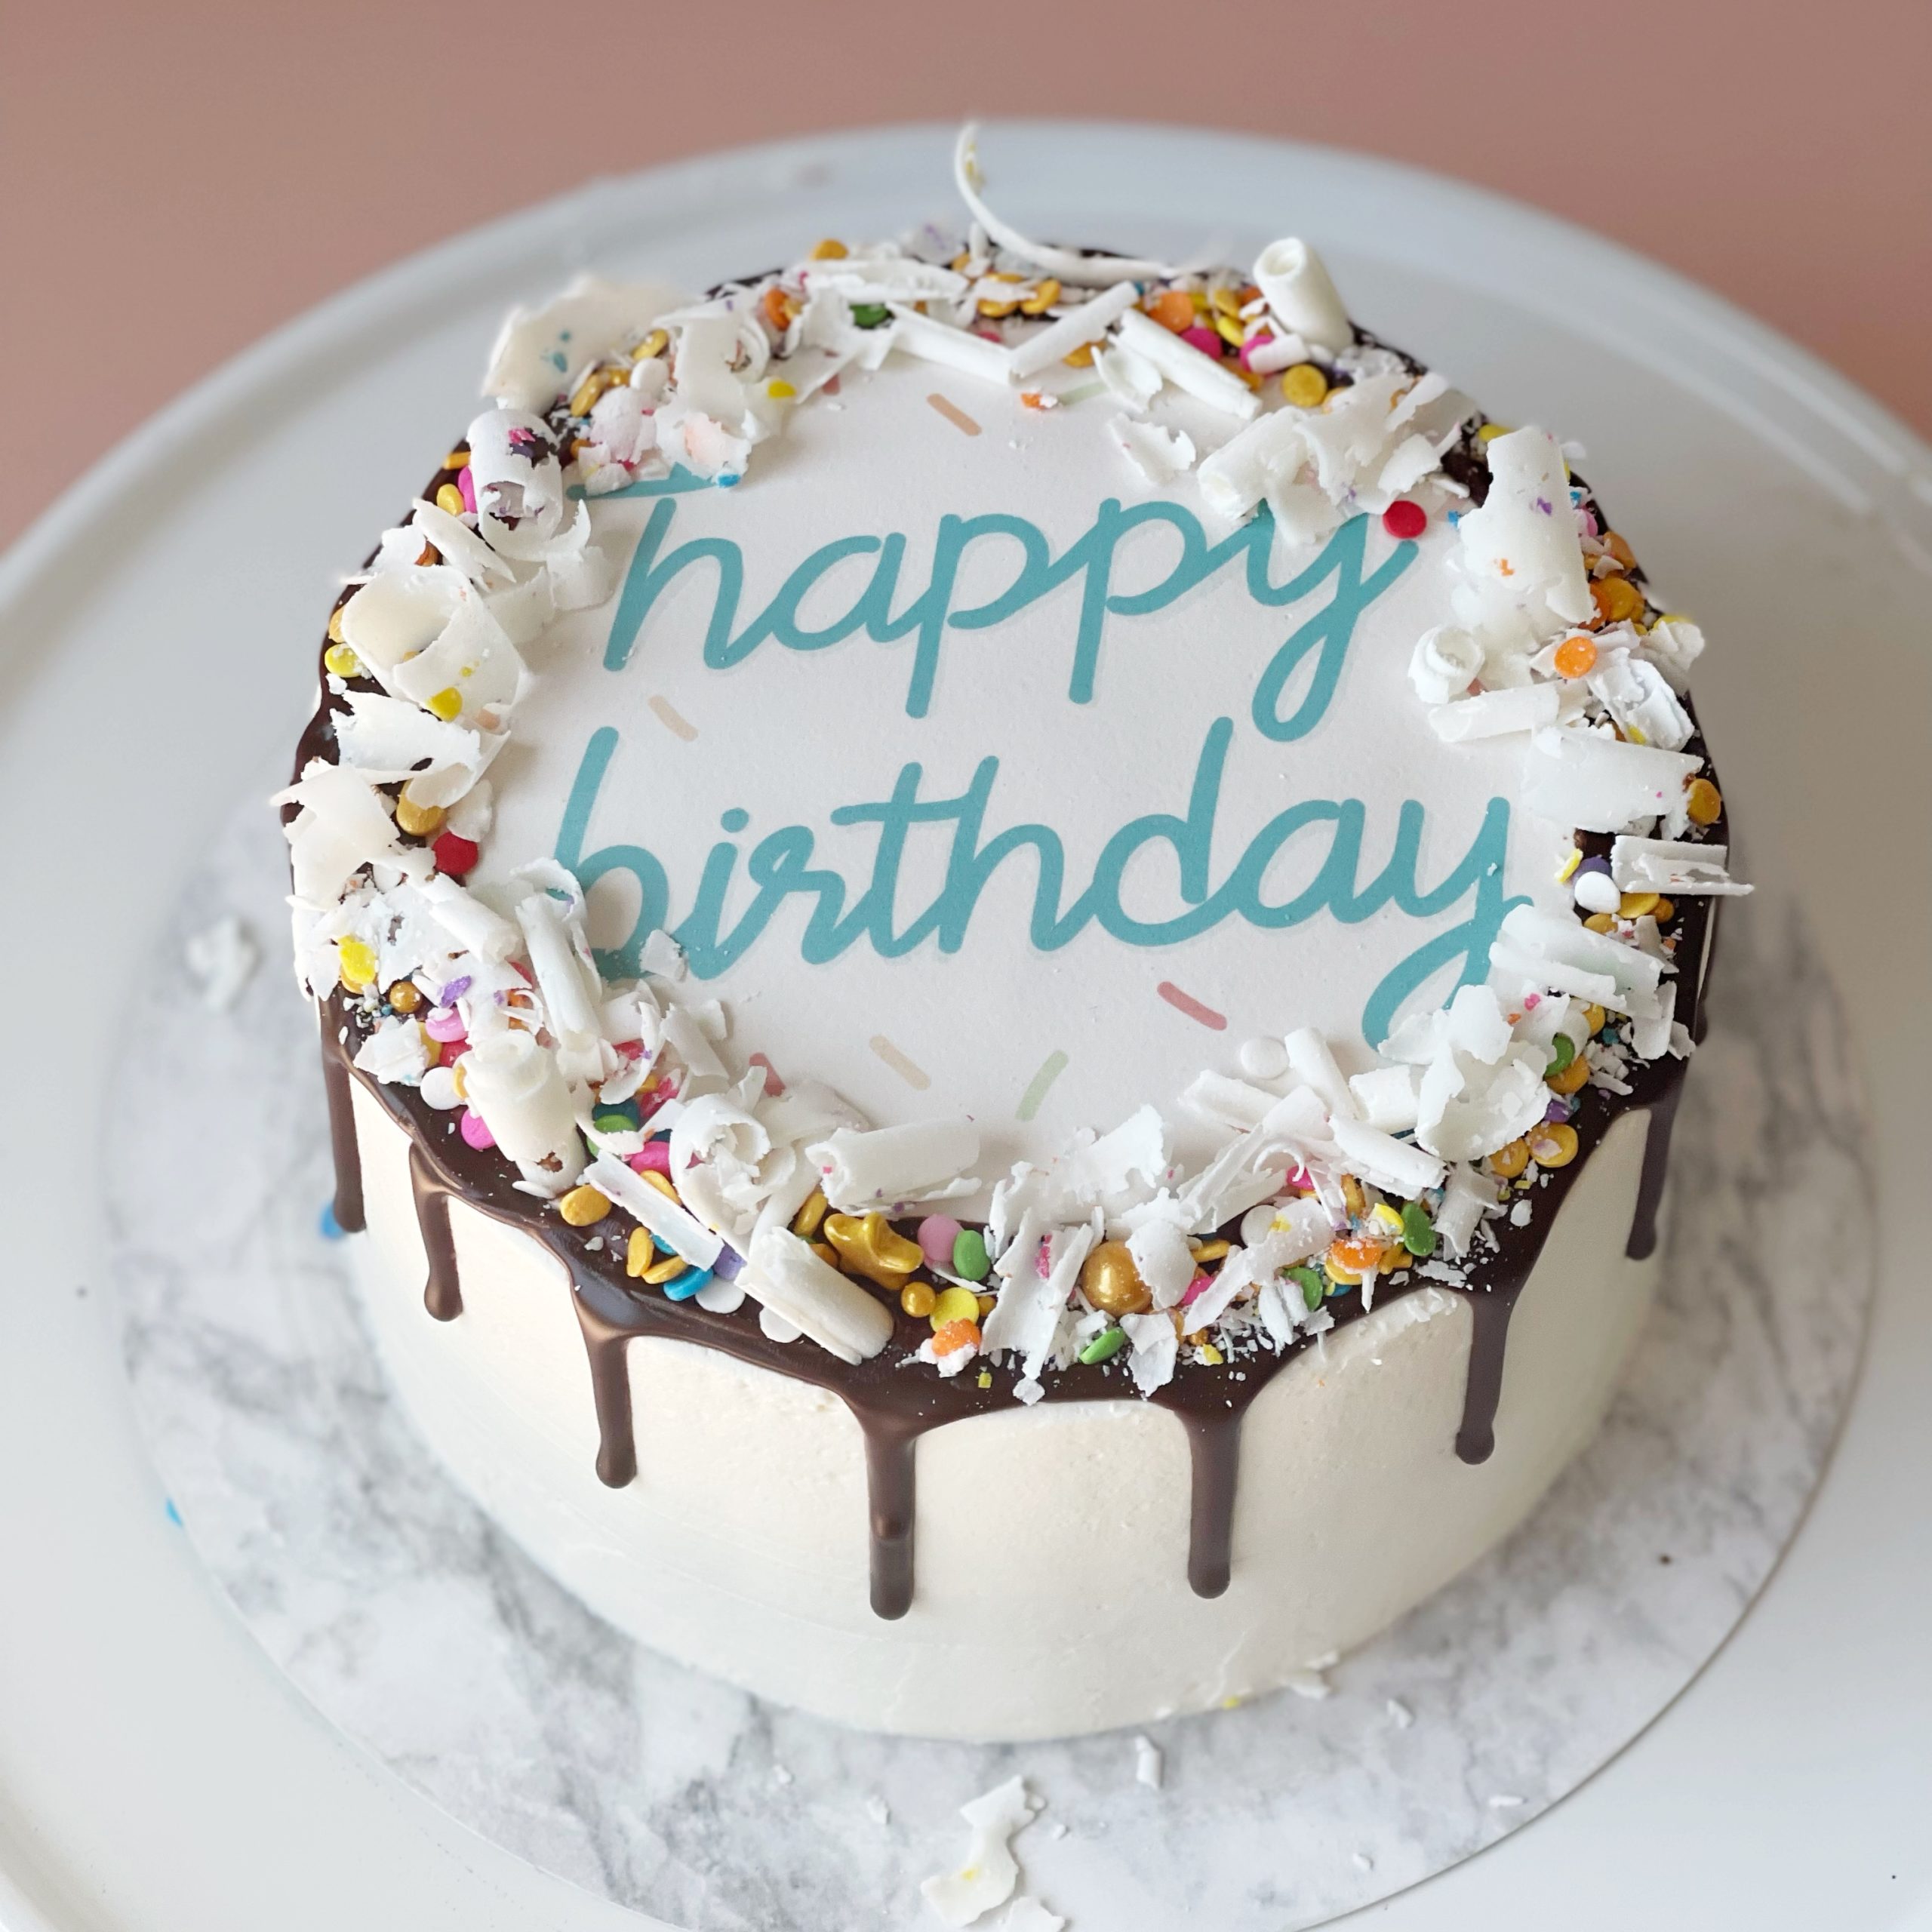 Order Birthday Cake Online | Same Day 𝗳𝗿𝗲𝗲 𝗗𝗲𝗹𝗶𝘃𝗲𝗿𝘆 in 2 hrs -  FNP-nextbuild.com.vn